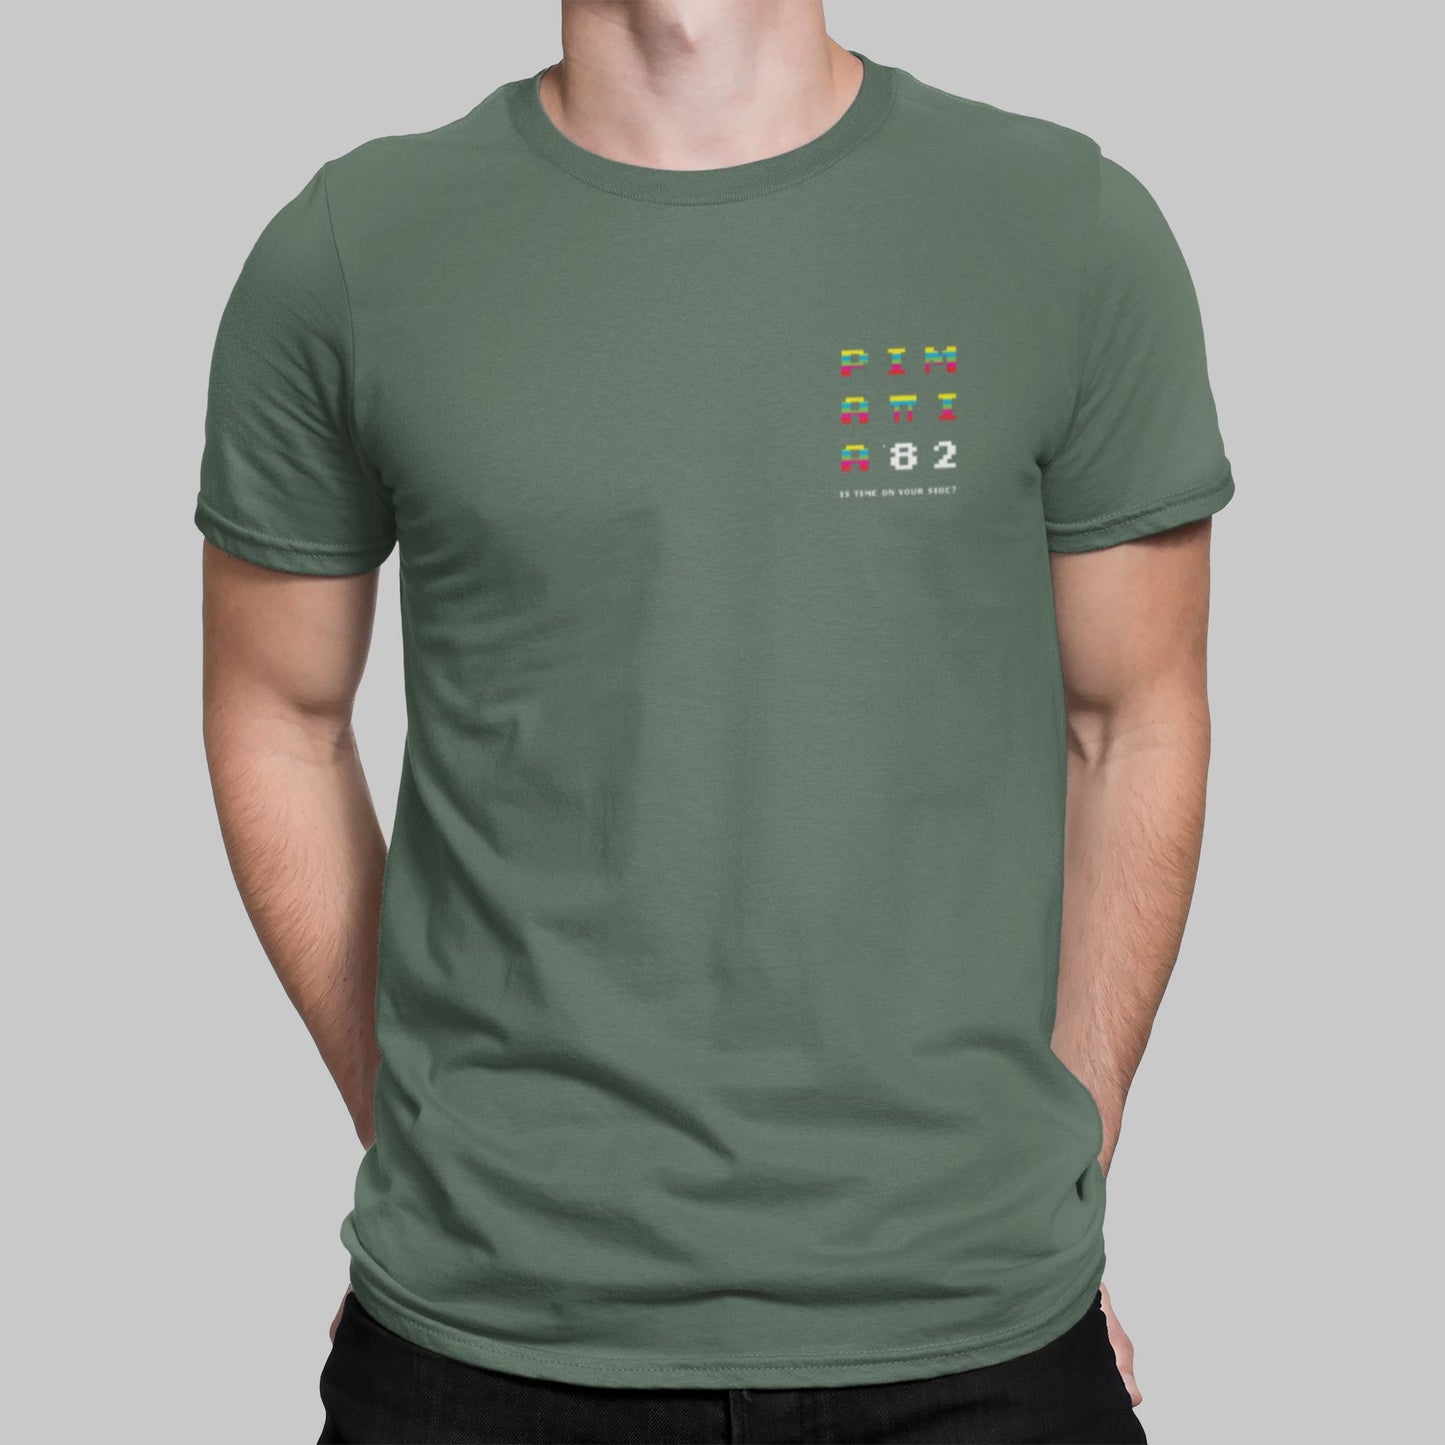 Pimania 82 Pocket Print Retro Gaming T-Shirt T-Shirt Seven Squared Small 34-36" Military Green 